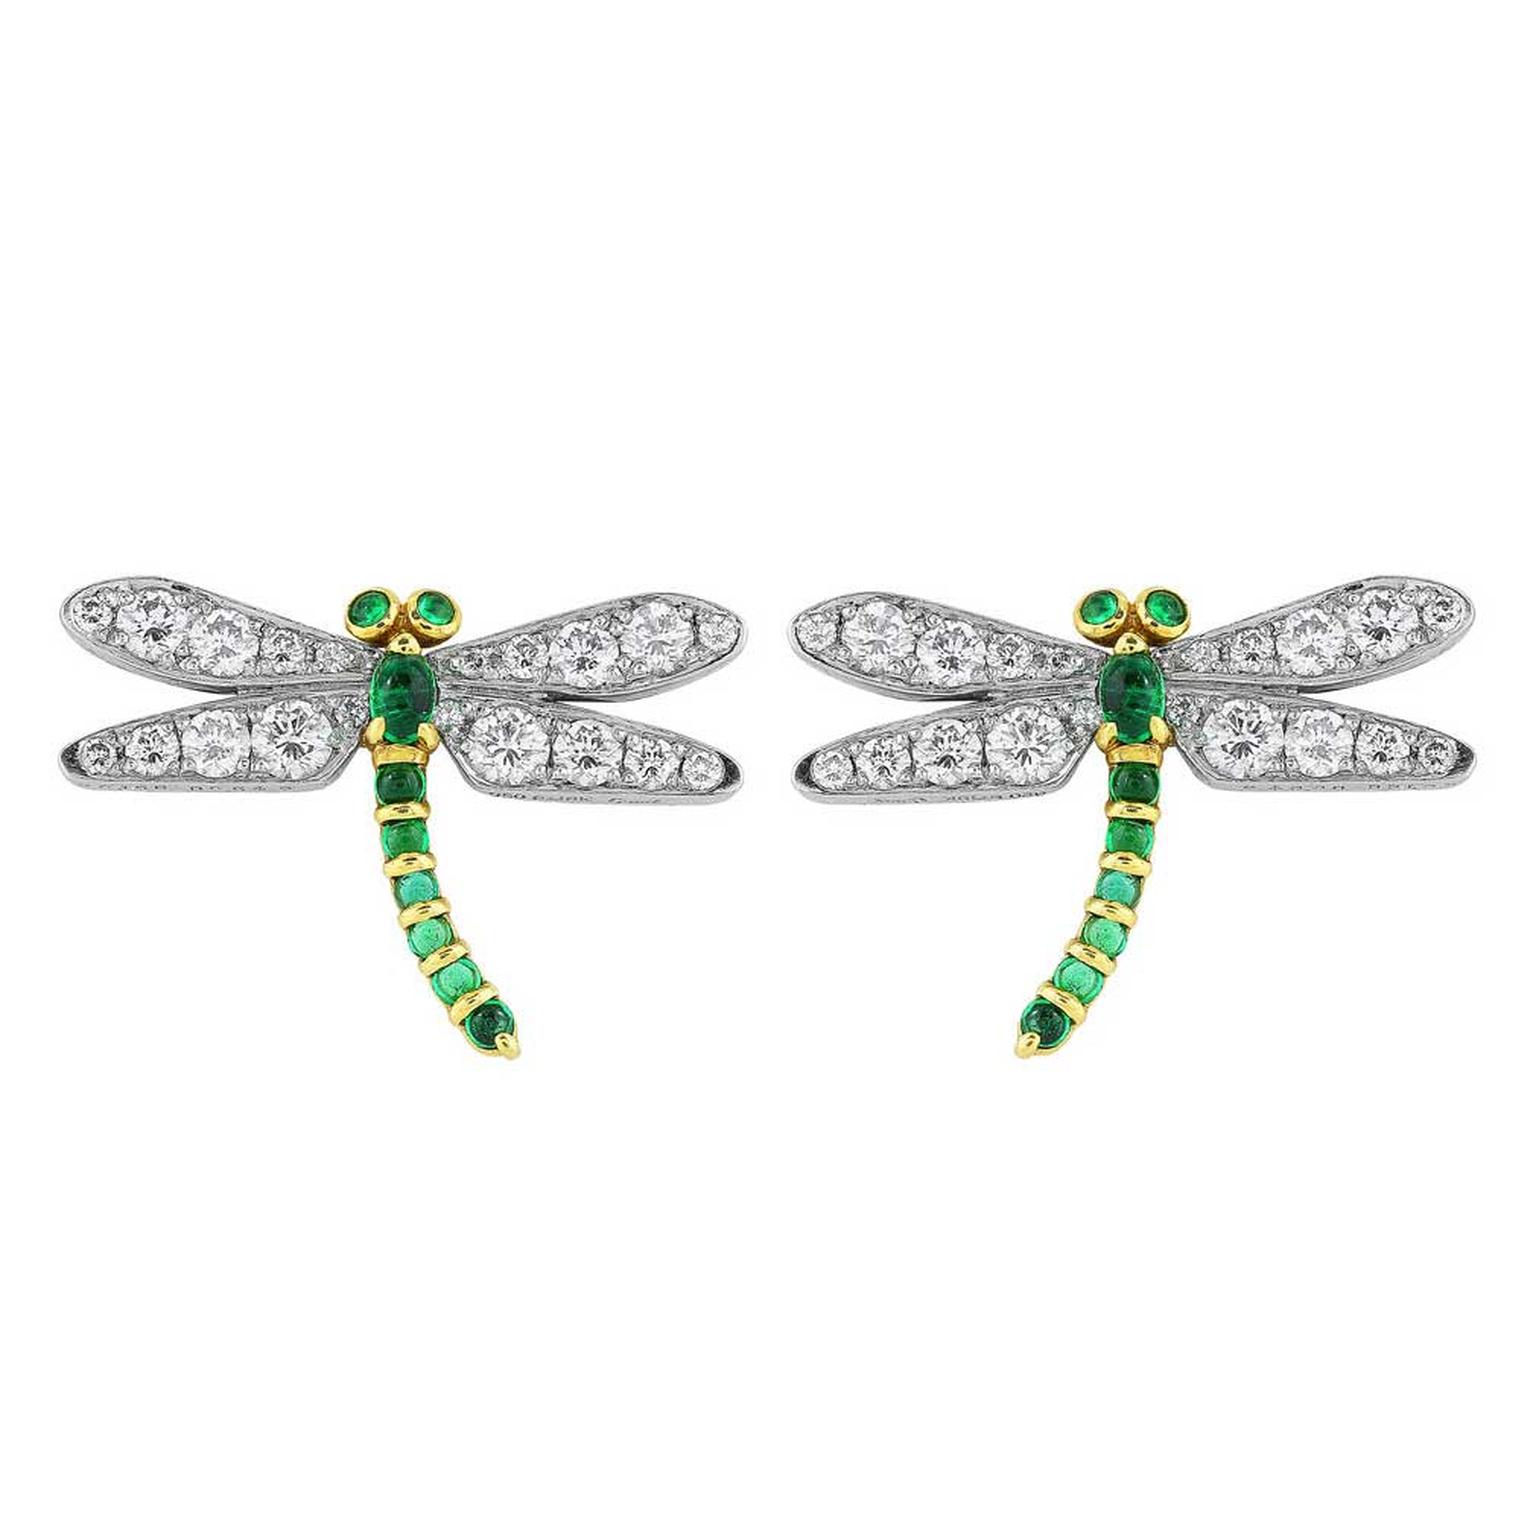 Shreve, Crump & Low emerald and diamond dragonfly earrings